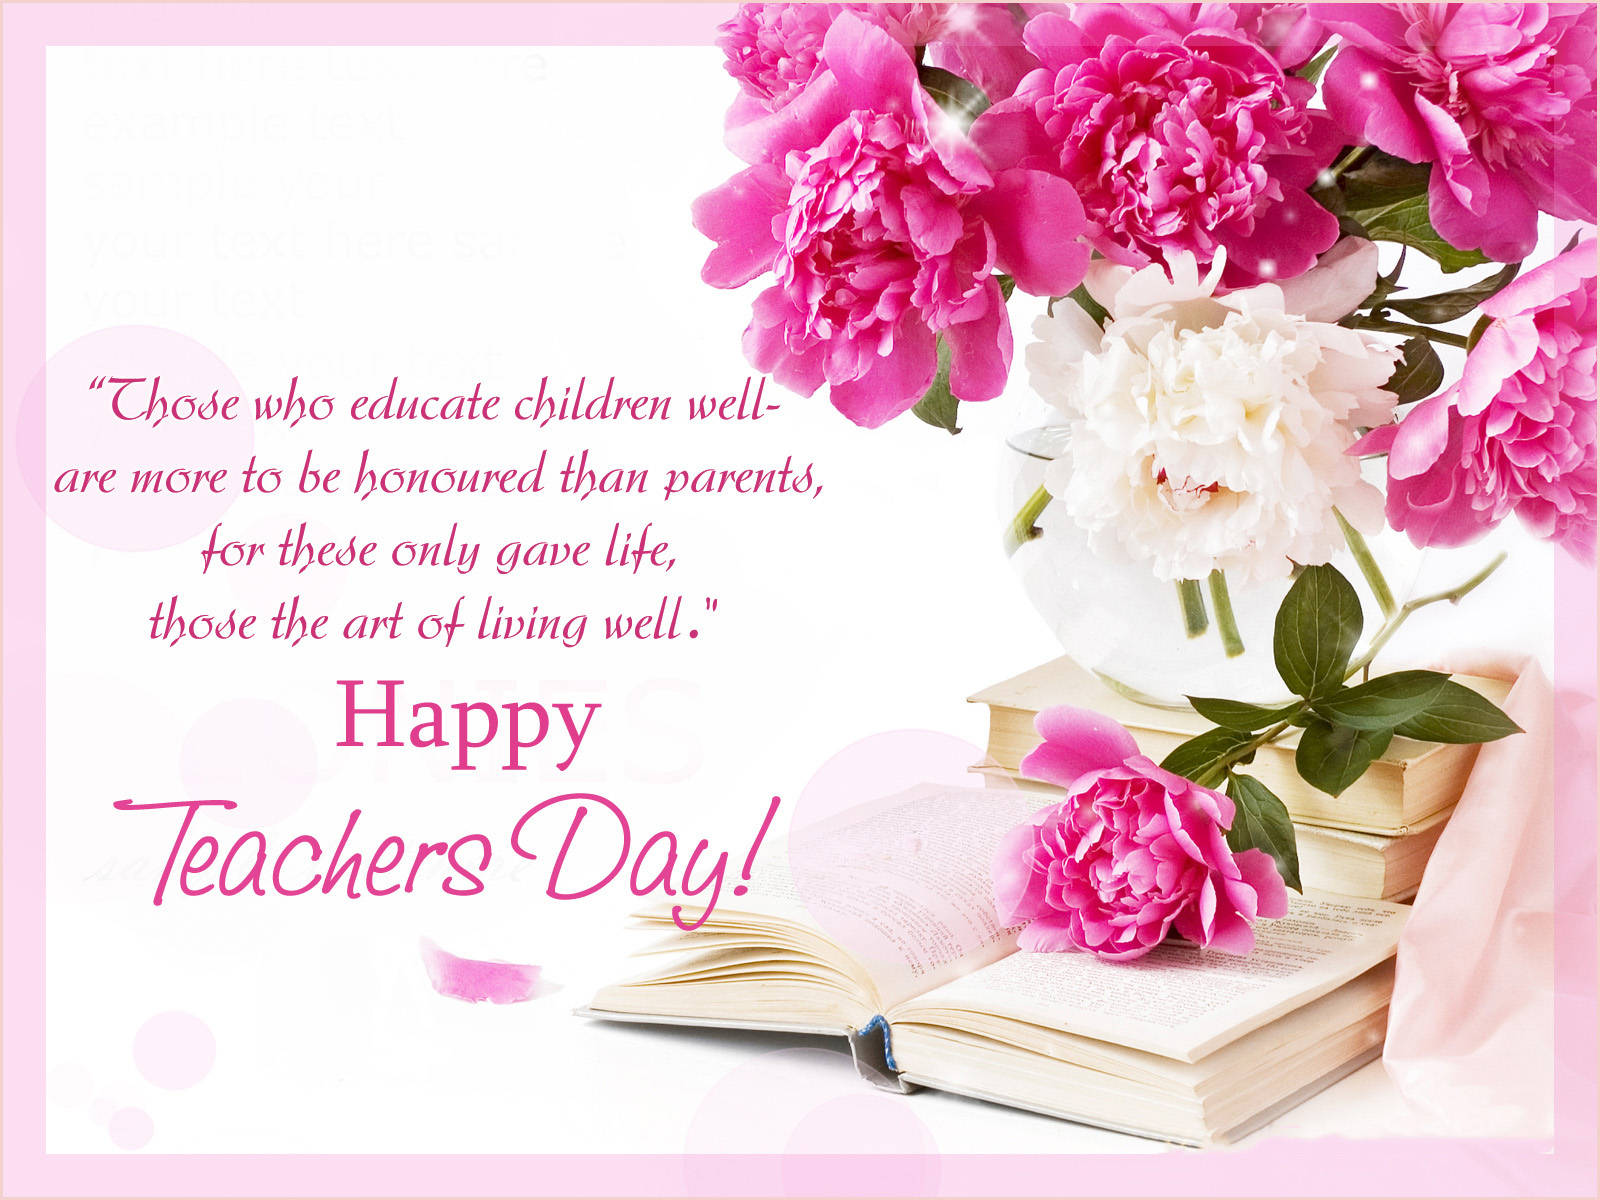 Happy Teachers' Day Honor